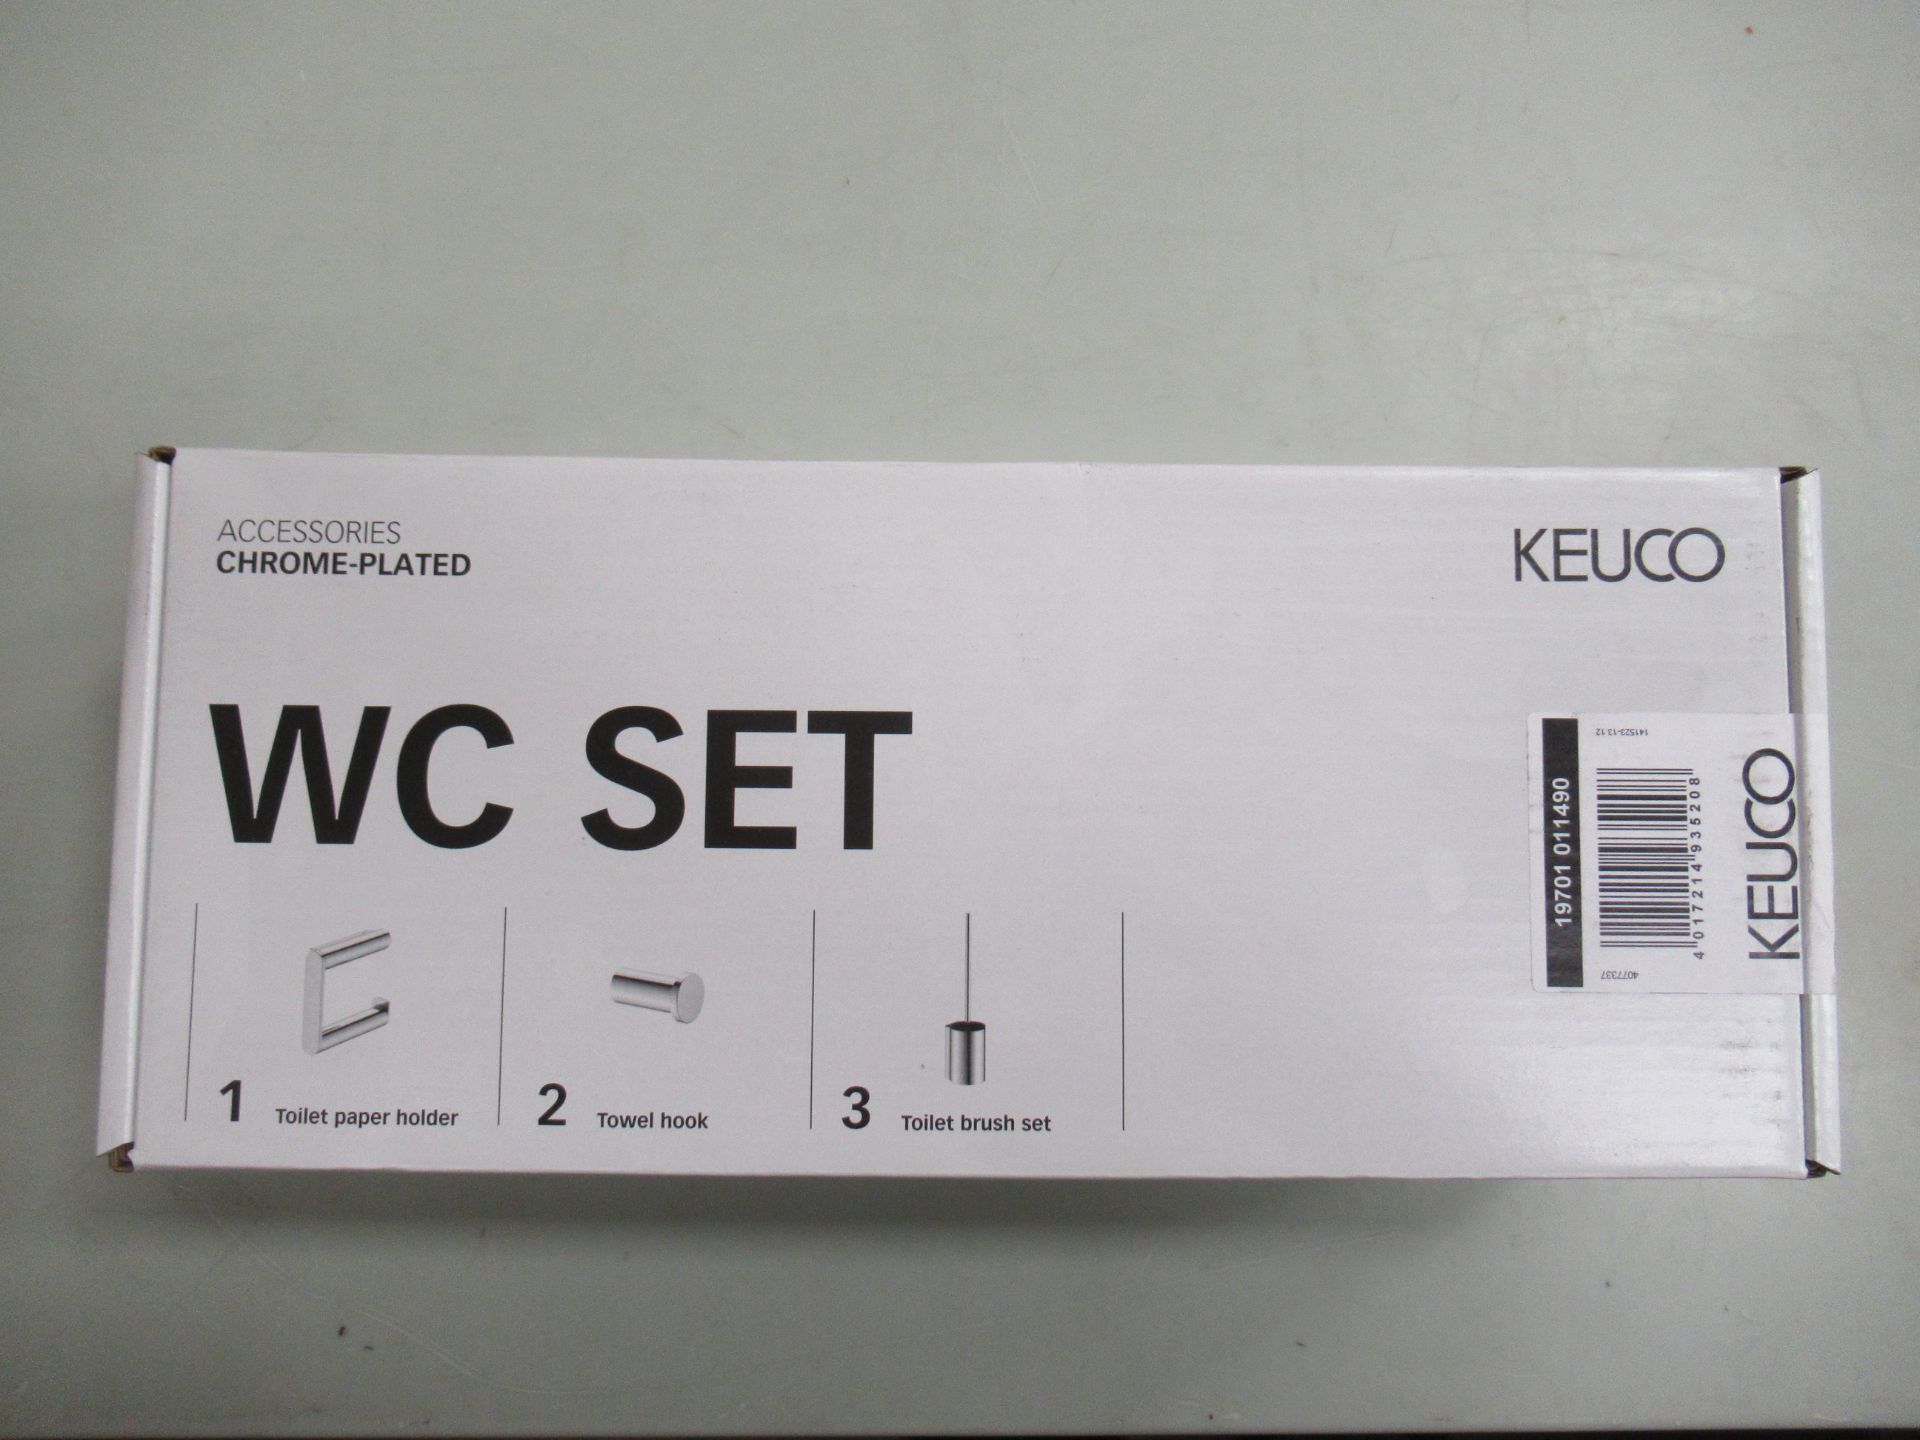 3 x Keuco W.C Set Chrome Plated, P/N 19701-011490